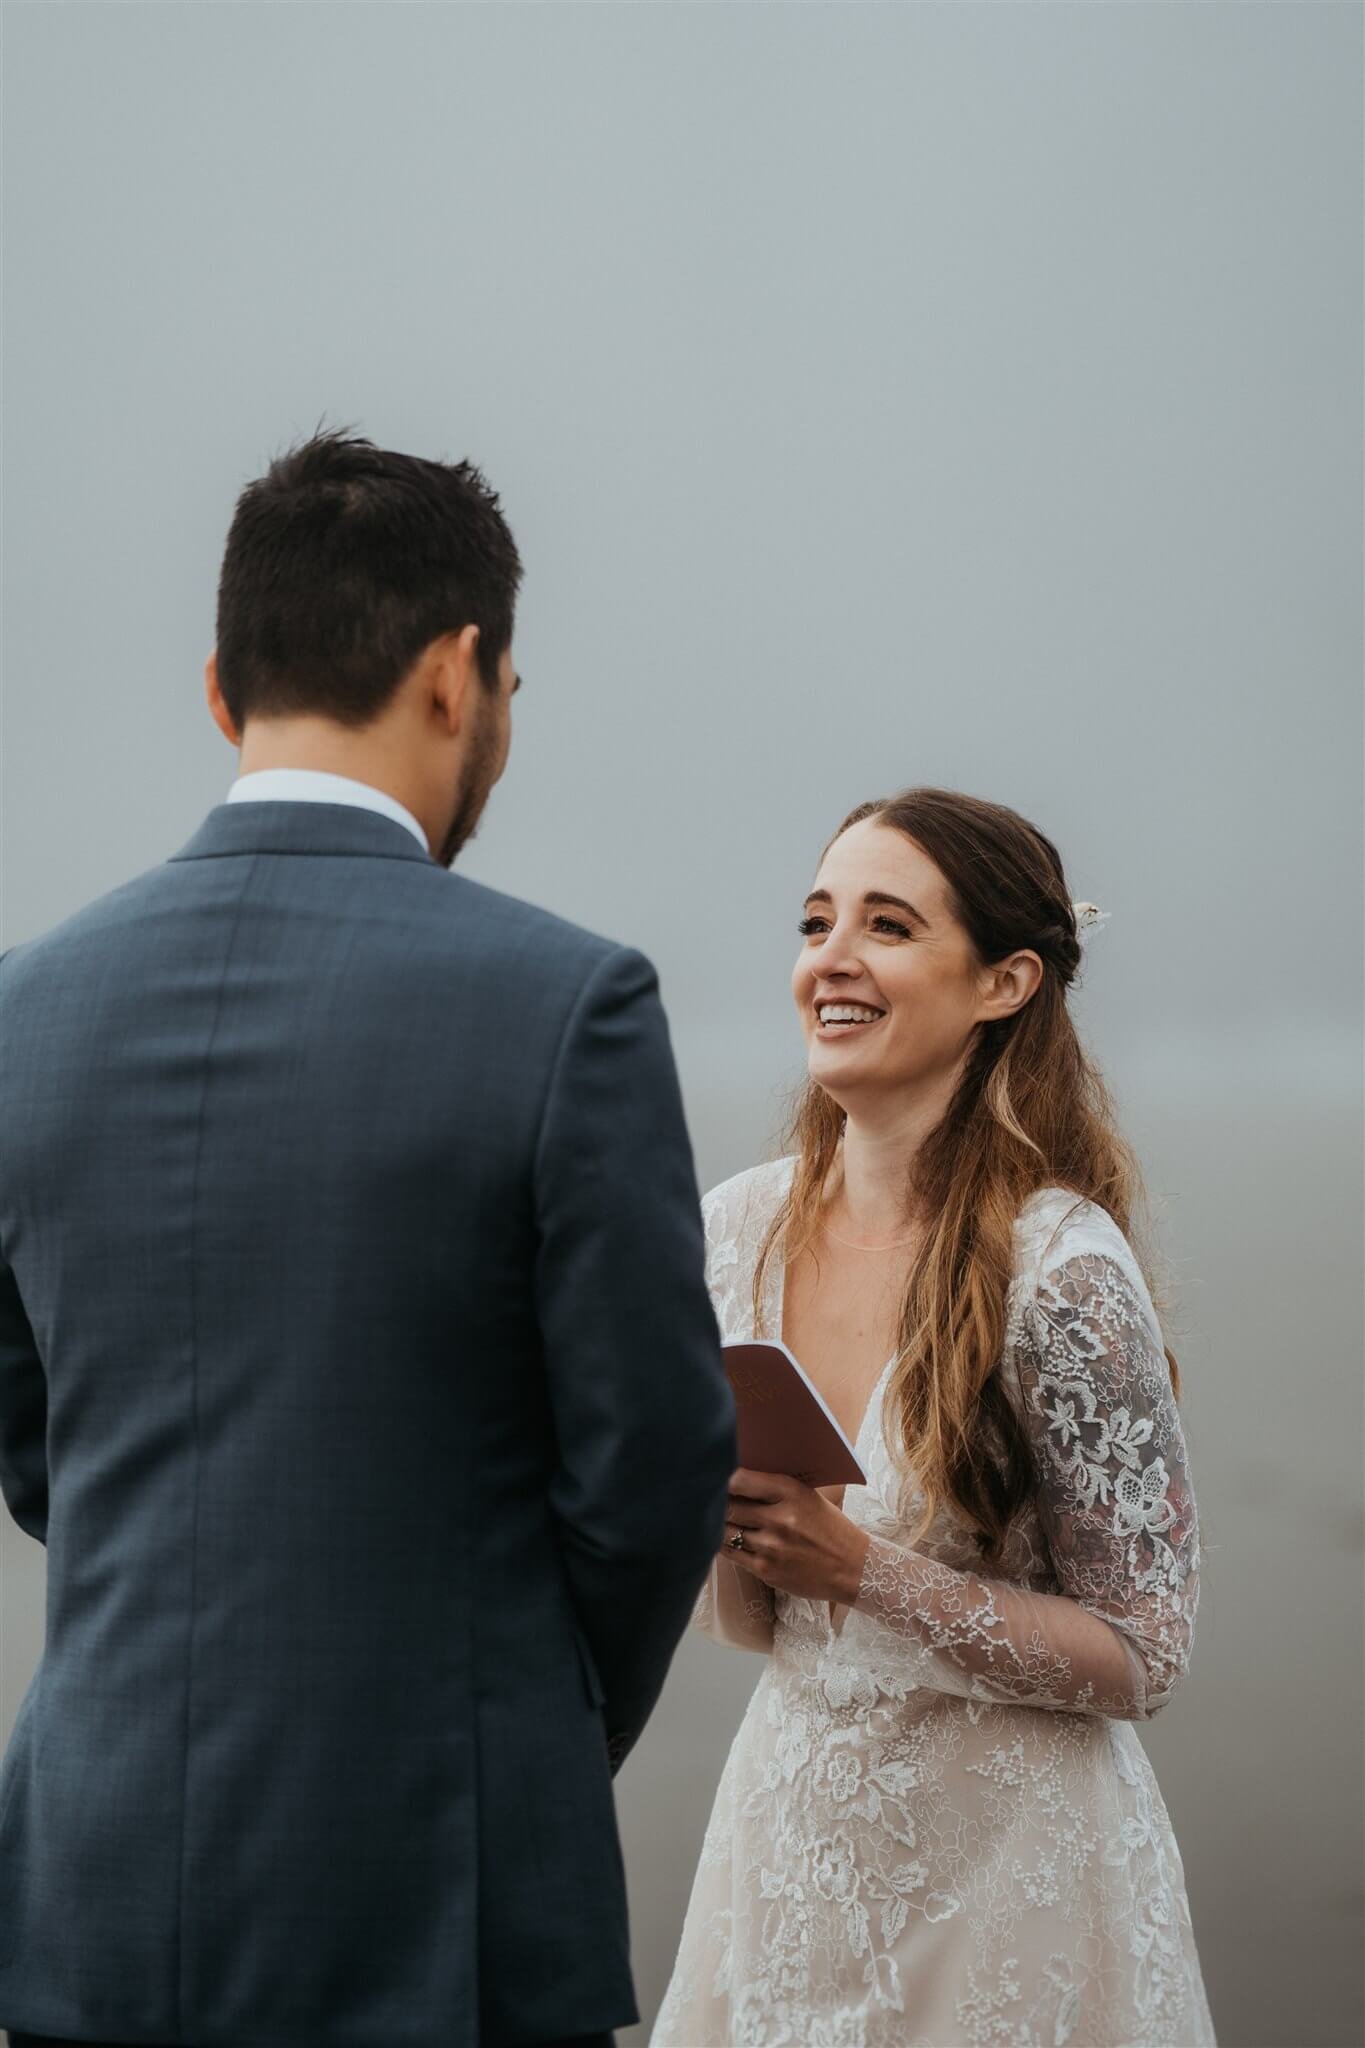 Bride and groom exchange vows at La Push Beach elopement